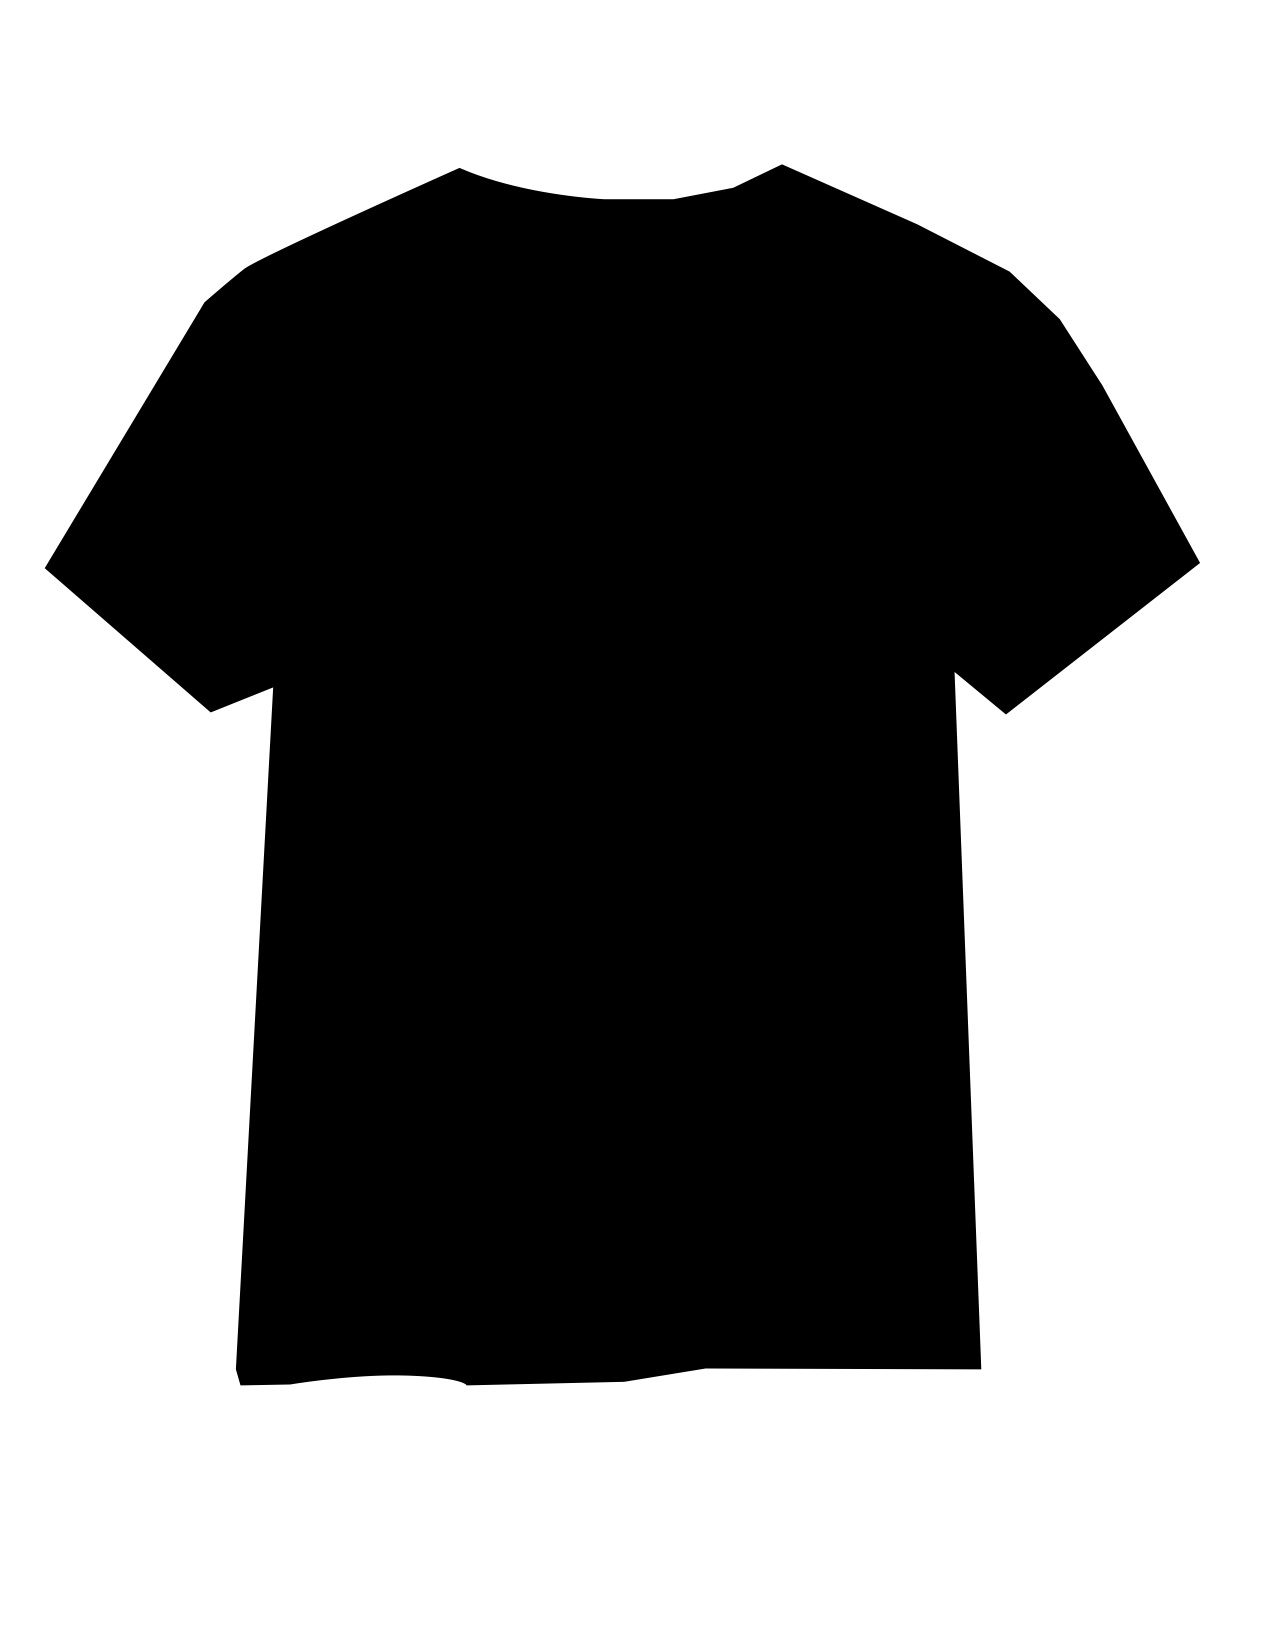 Black T Shirt Template Front - ClipArt Best